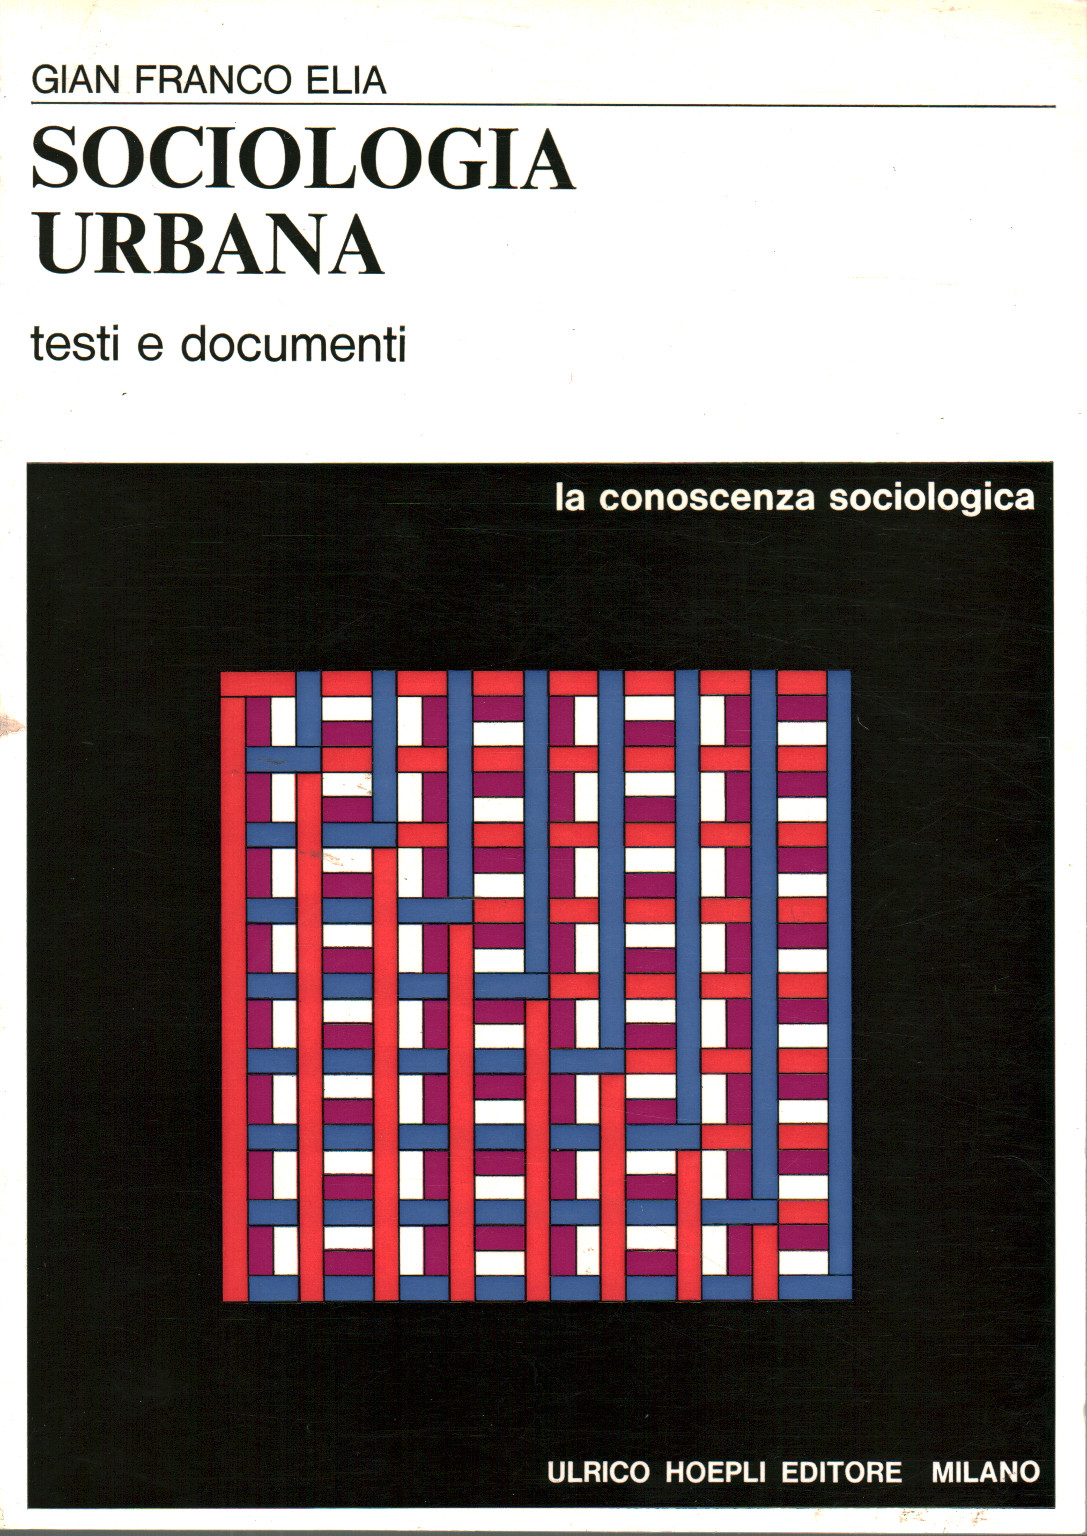 Urban sociology, Gian Franco Elia